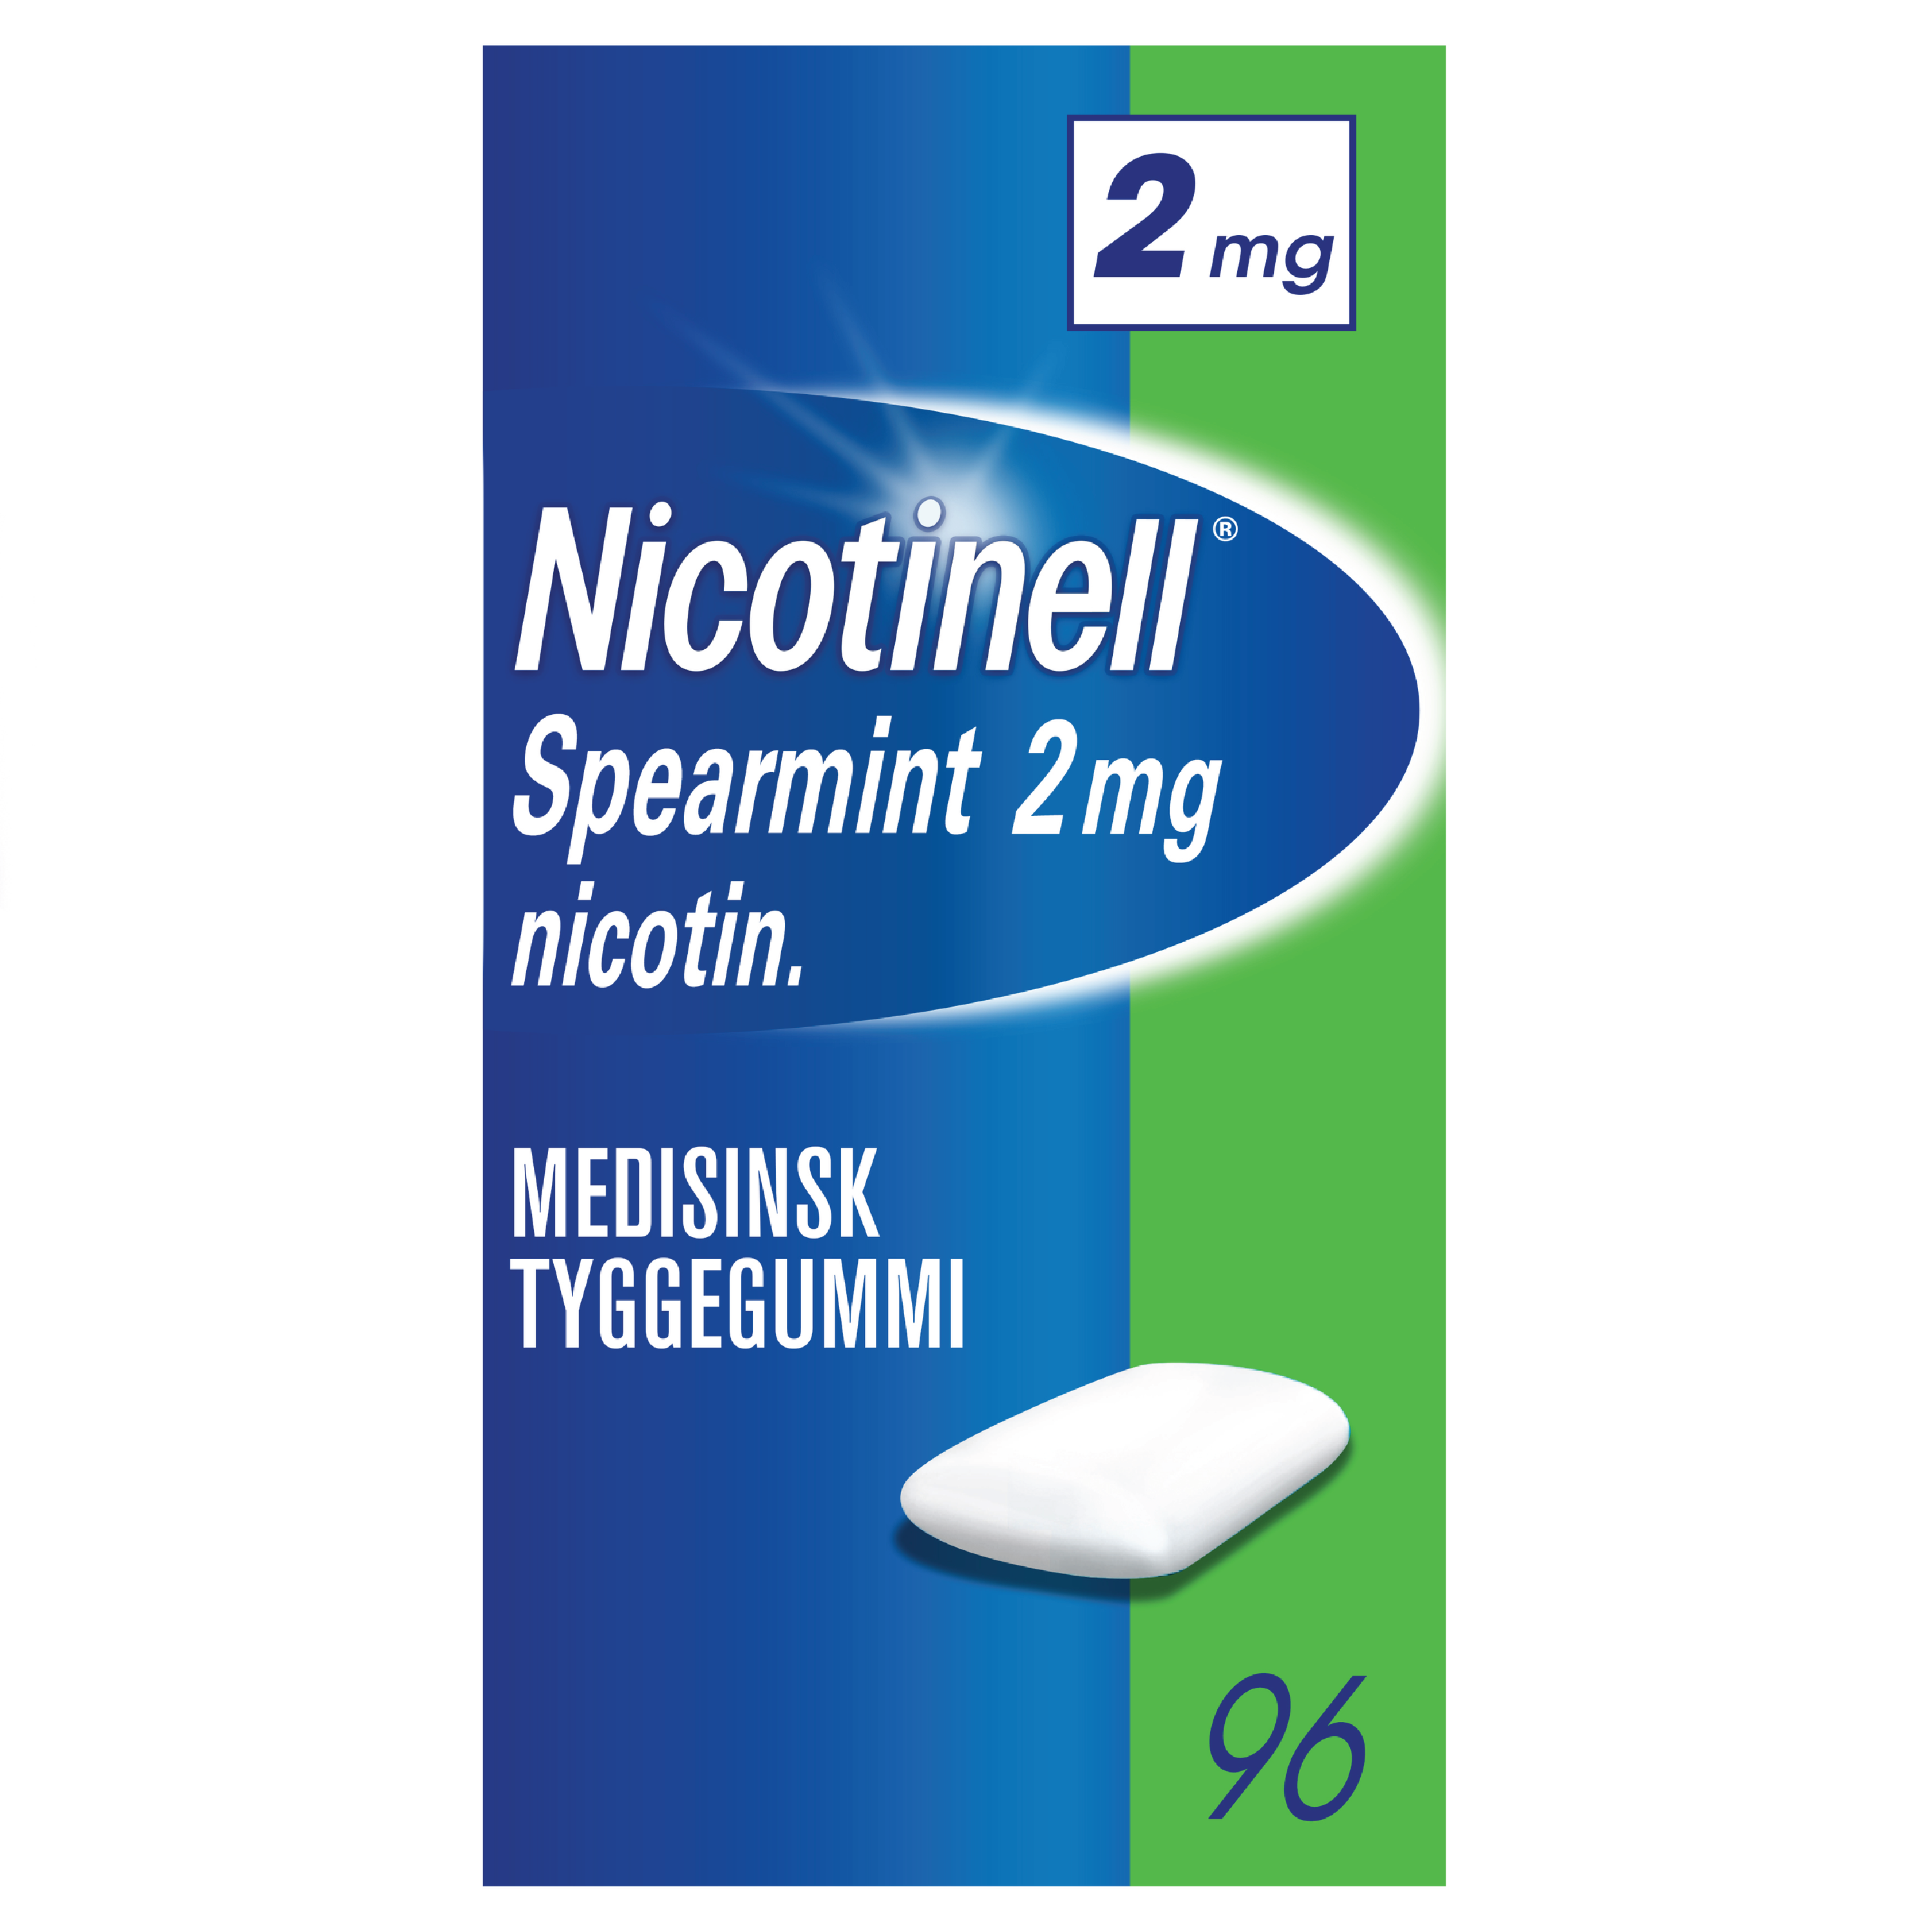 Nicotinell Spearmint Tyggegummi 2mg, 96 stk.